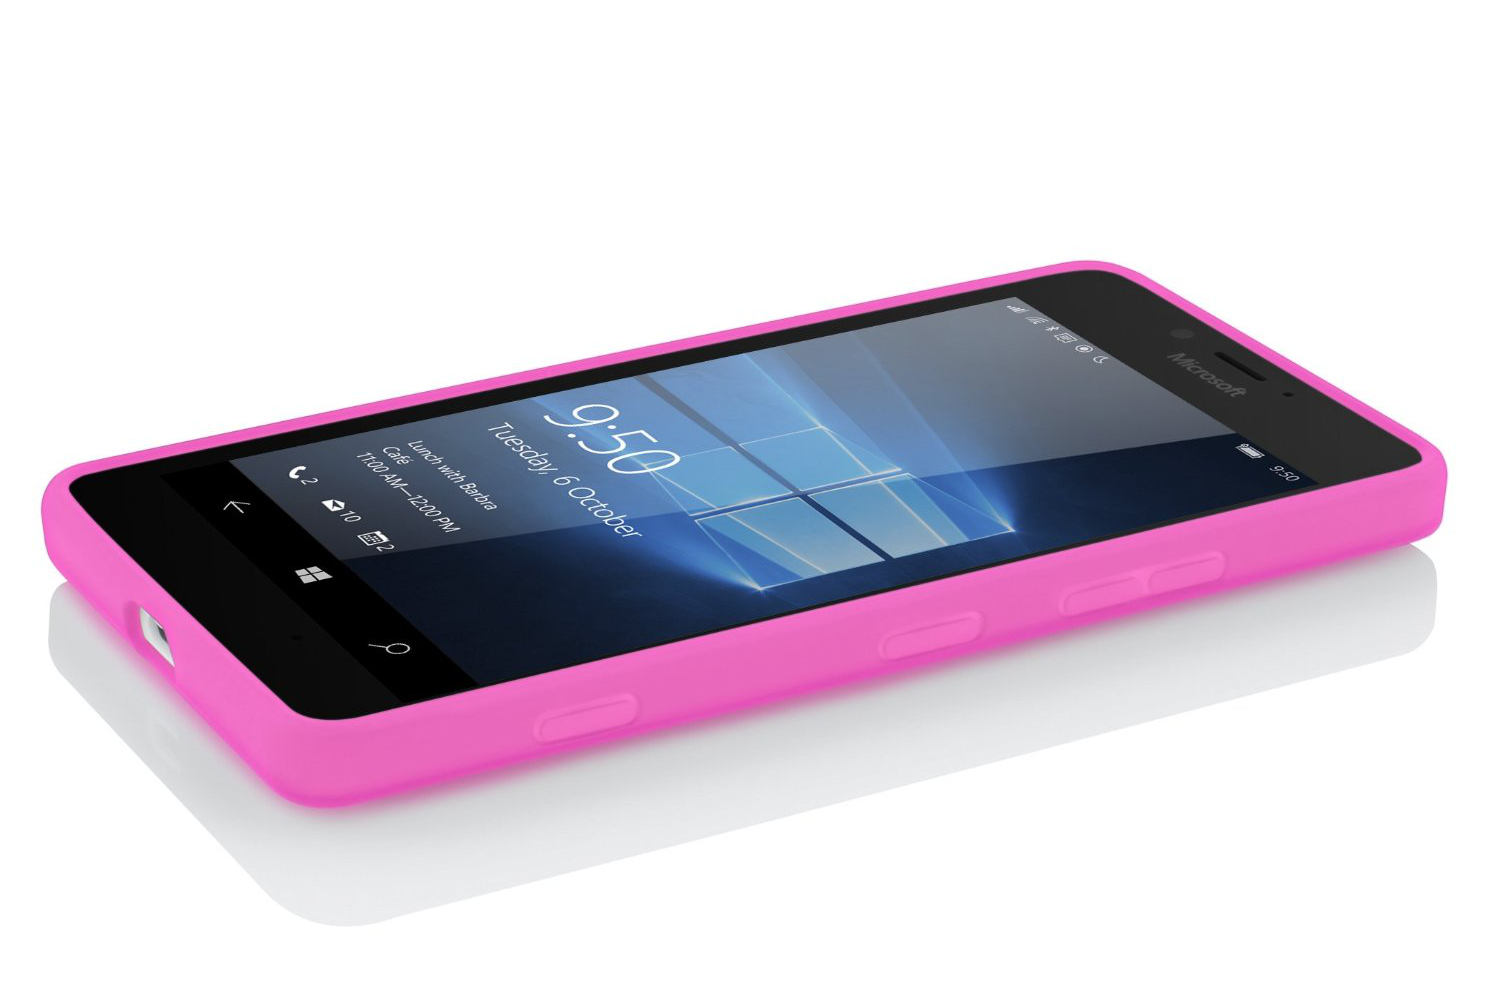 Housse Protection Souple en Silicone TPU avec Anti-Choc et Anti-Rayures Cadorabo Coque pour Nokia Lumia 950 en Metallic Argent Ultra Slim Fin Gel Case Cover Bumper 